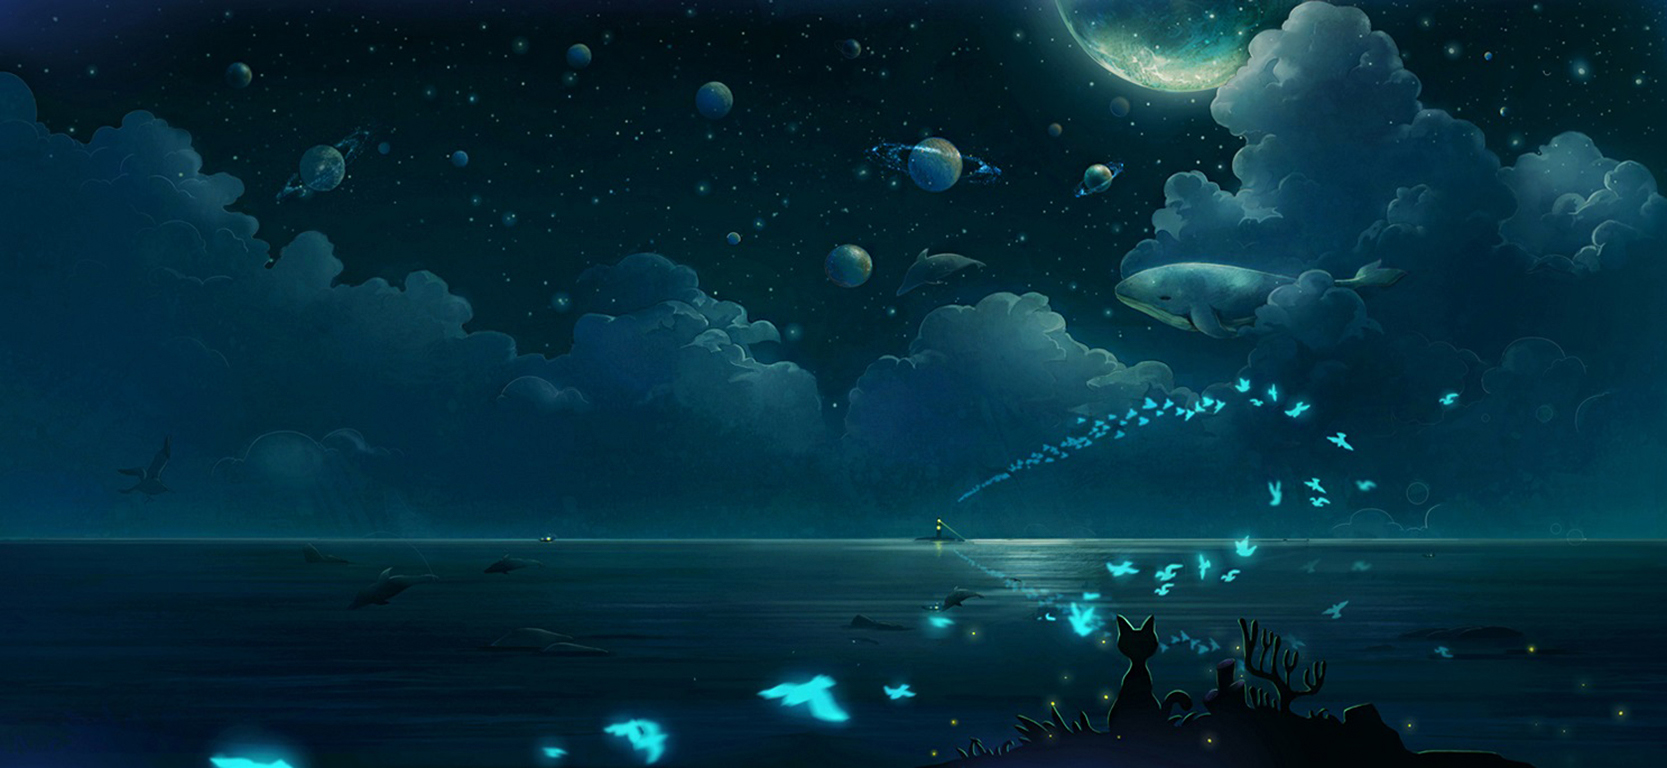 HD desktop wallpaper: Anime, Landscape, Sky, Night, Moon, Bird, Cat, Ocean,  Planet, Cloud, Fish, Whale, Star download free picture #695410